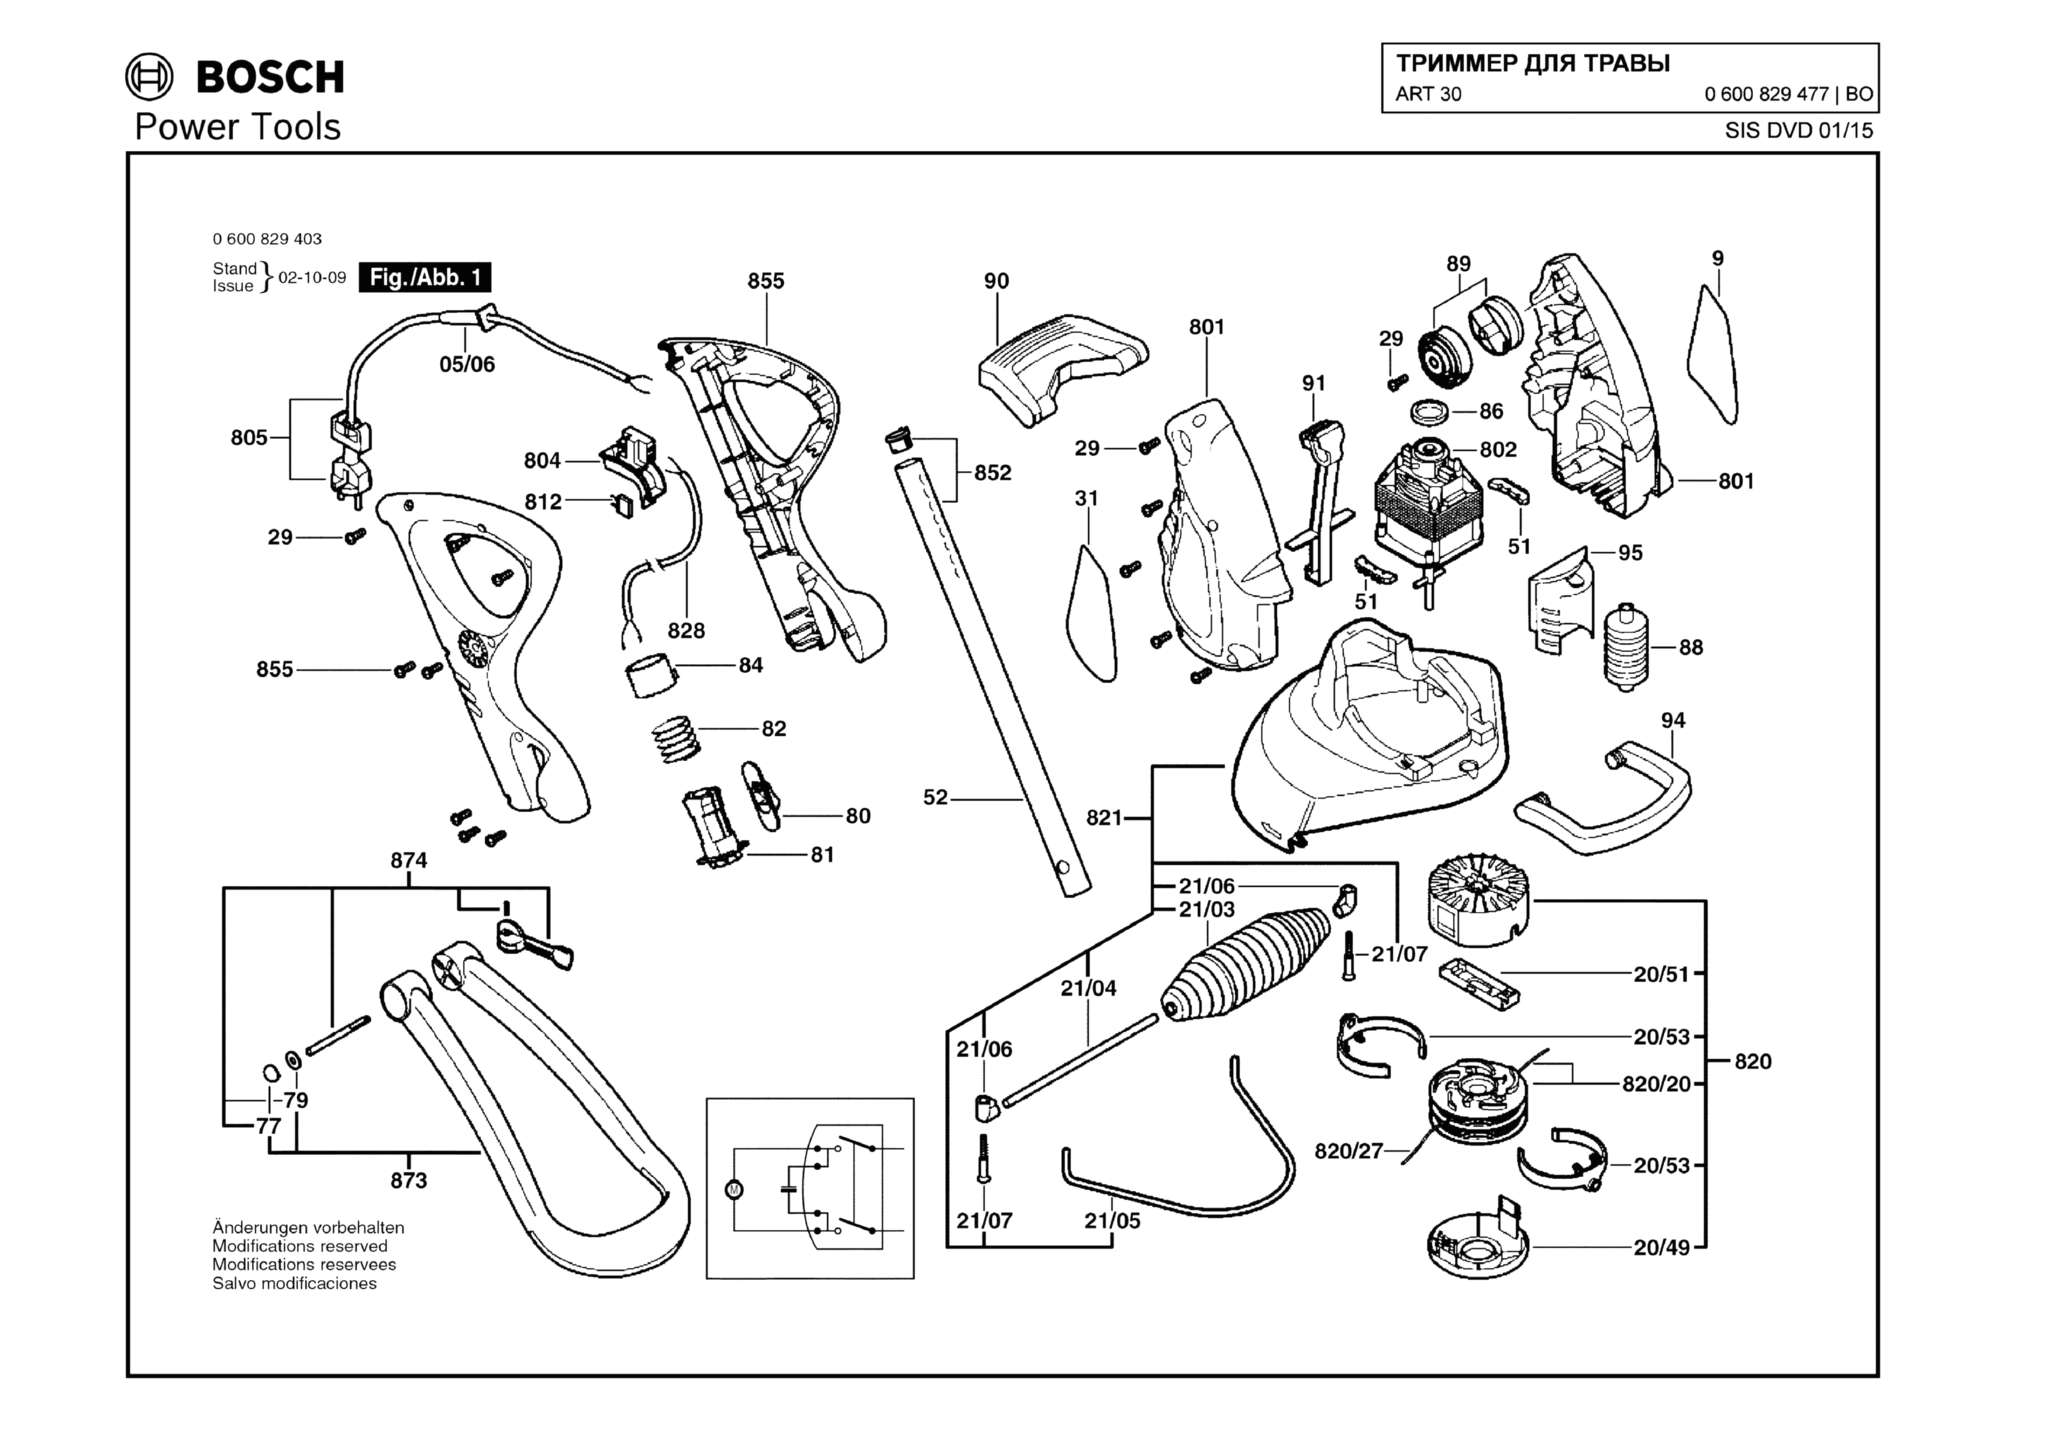 Запчасти, схема и деталировка Bosch ART 30 (ТИП 0600829477)